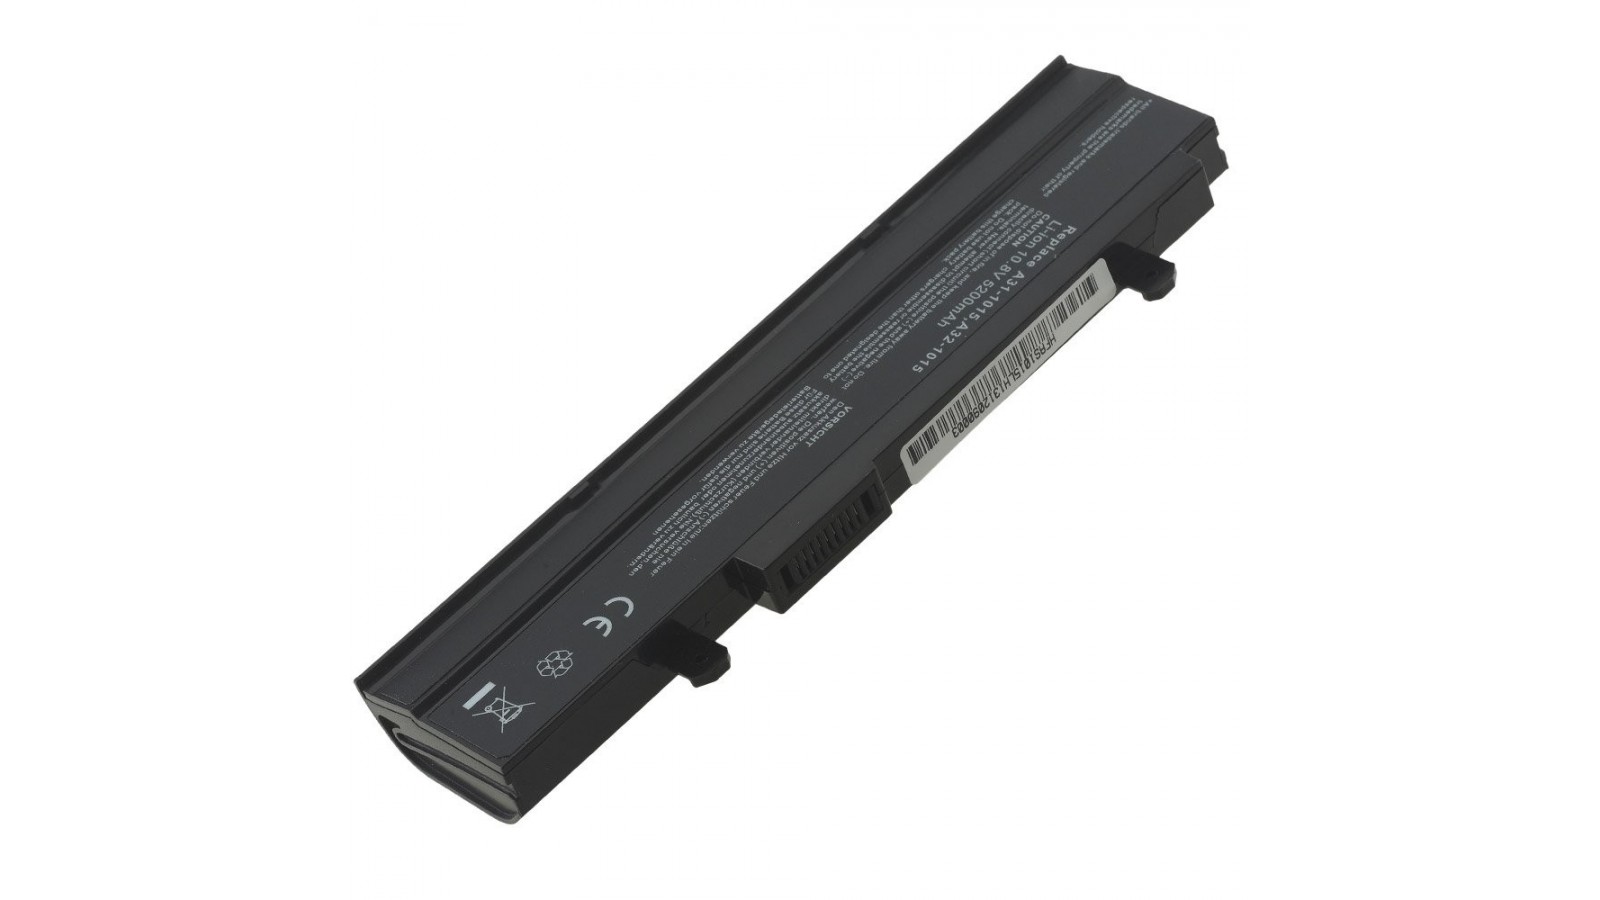 Batteria 5200 mAh compatibile con ASUS Eee PC VX6 / Eee PC VX6S